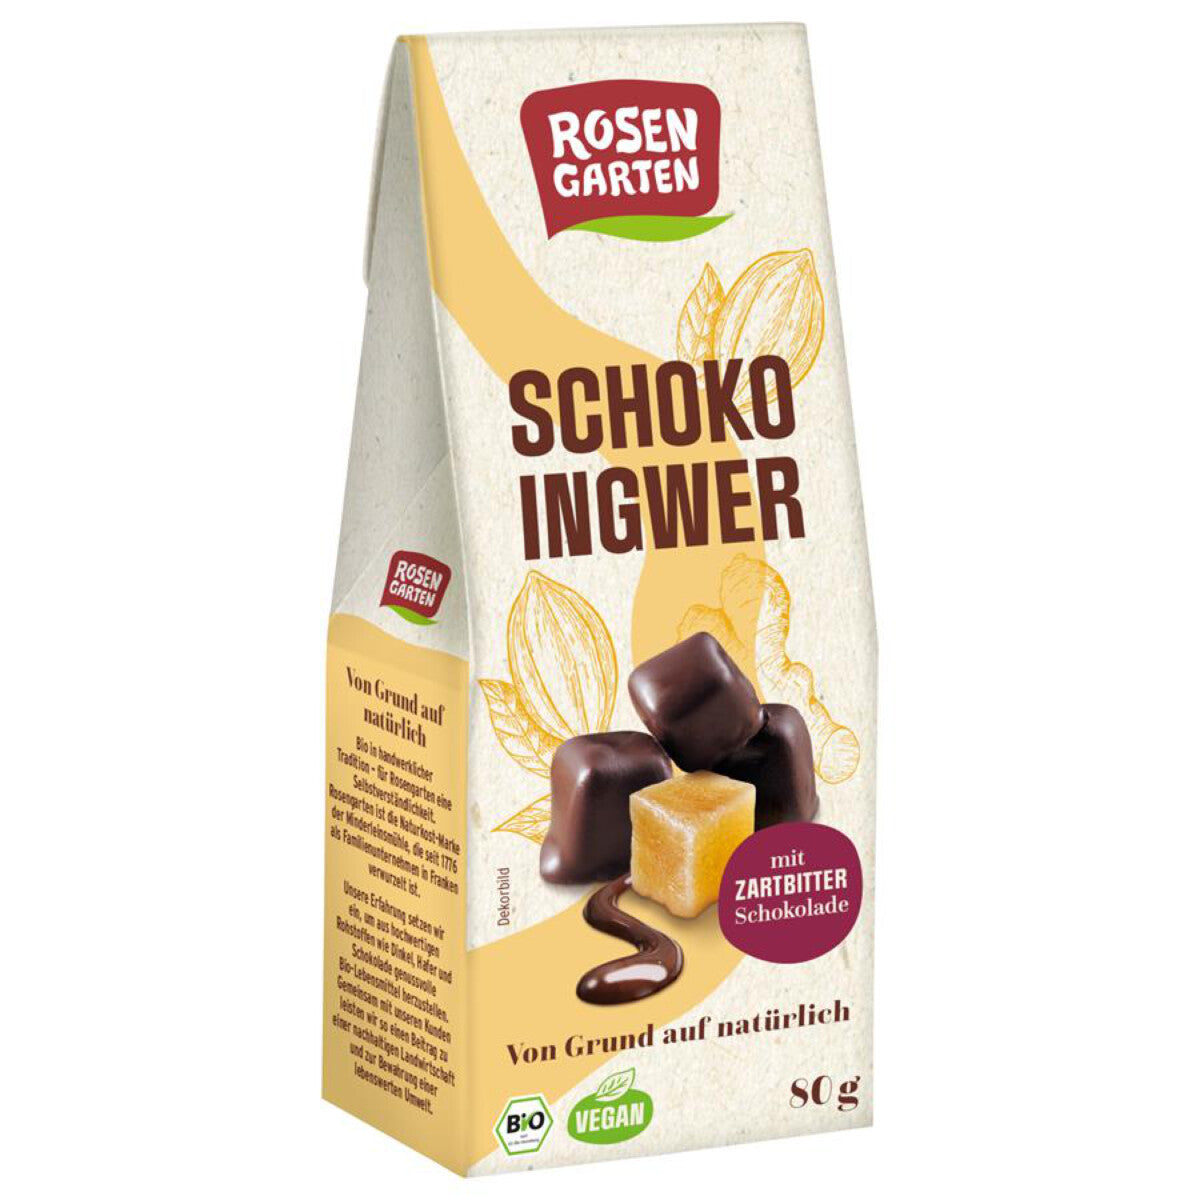 ROSENGARTEN Schoko Ingwer - 80 g